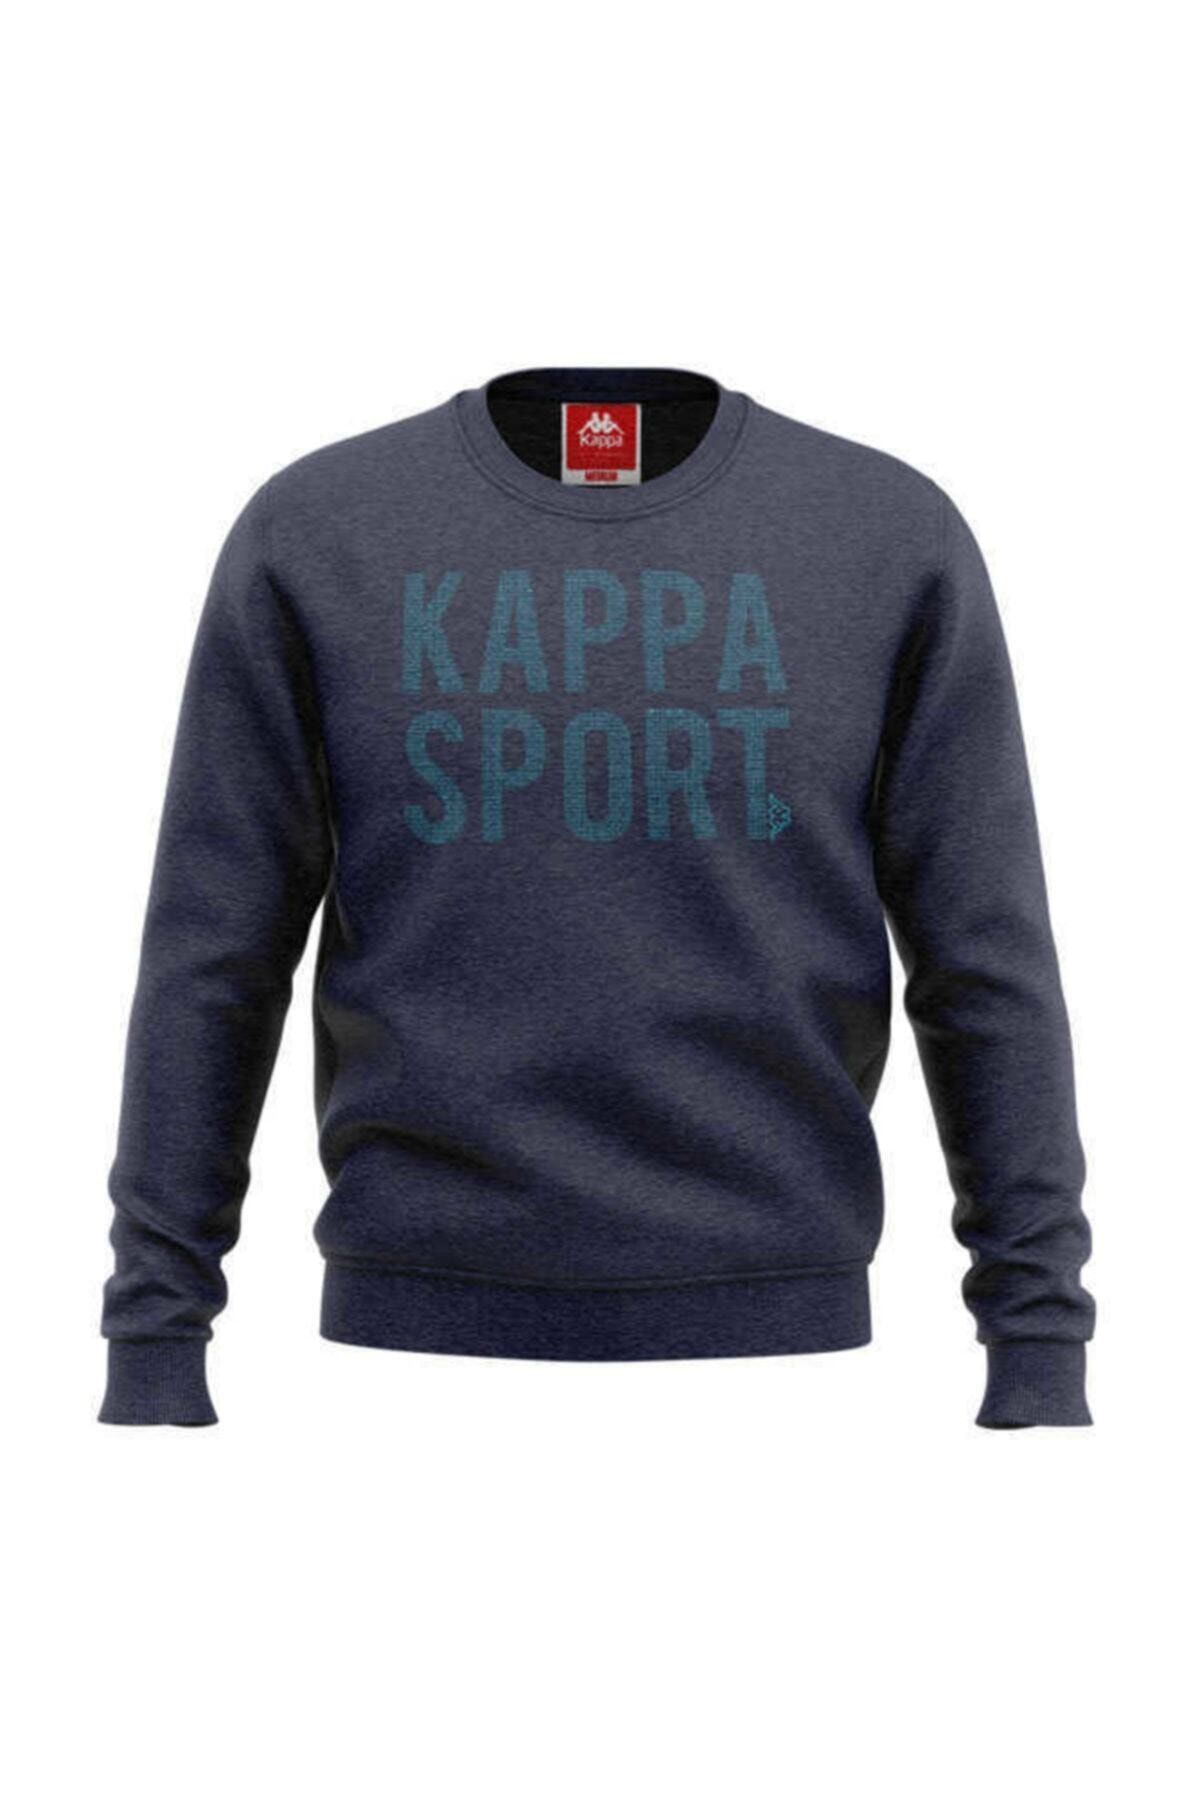 Kappa Erkek Sweatshirt - 1-304S6L0